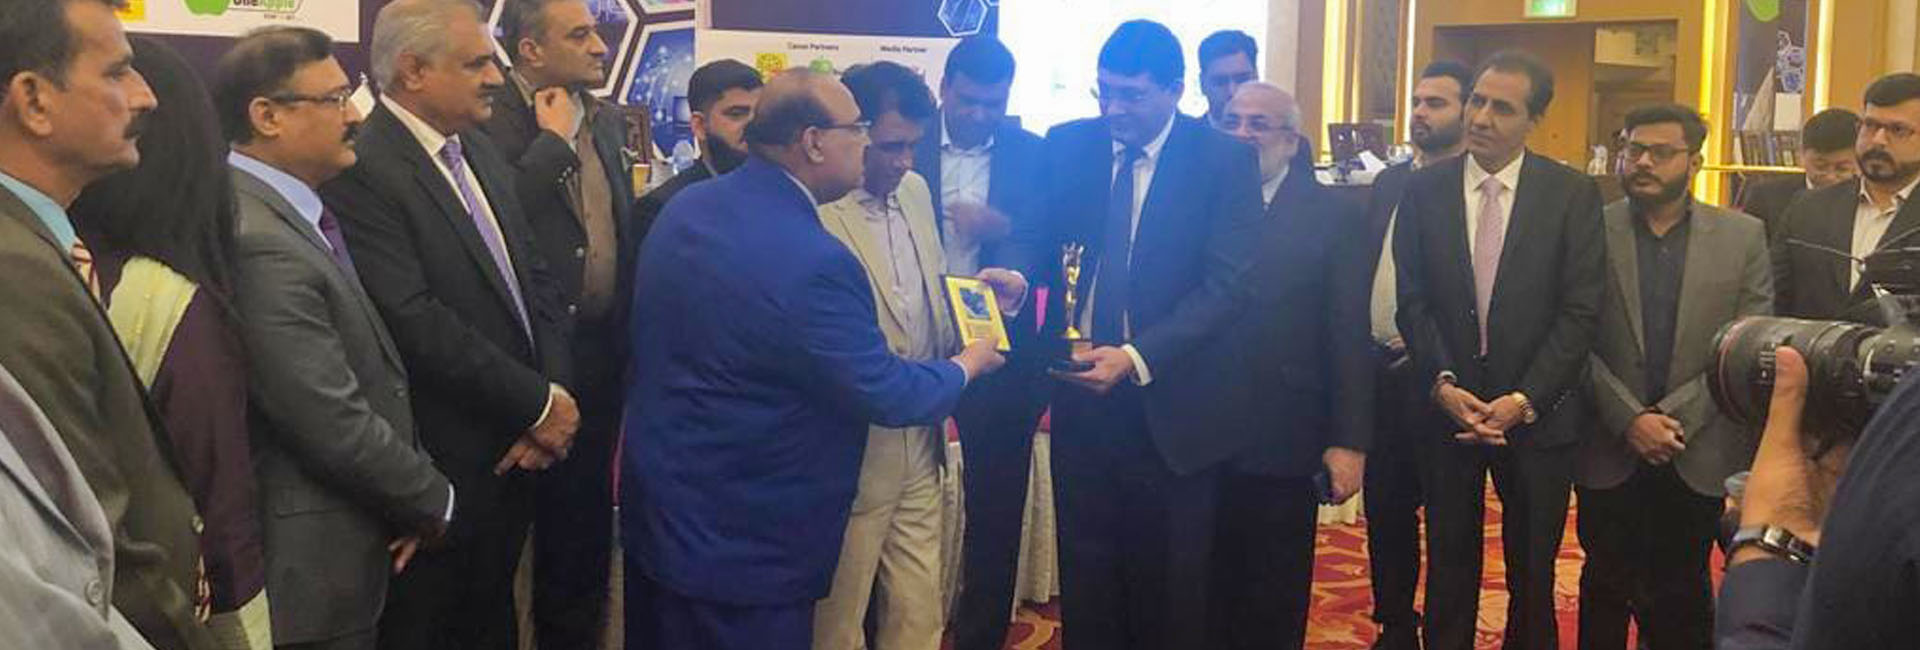 WorldCall Telecom Limited Won the Best Media Company Award